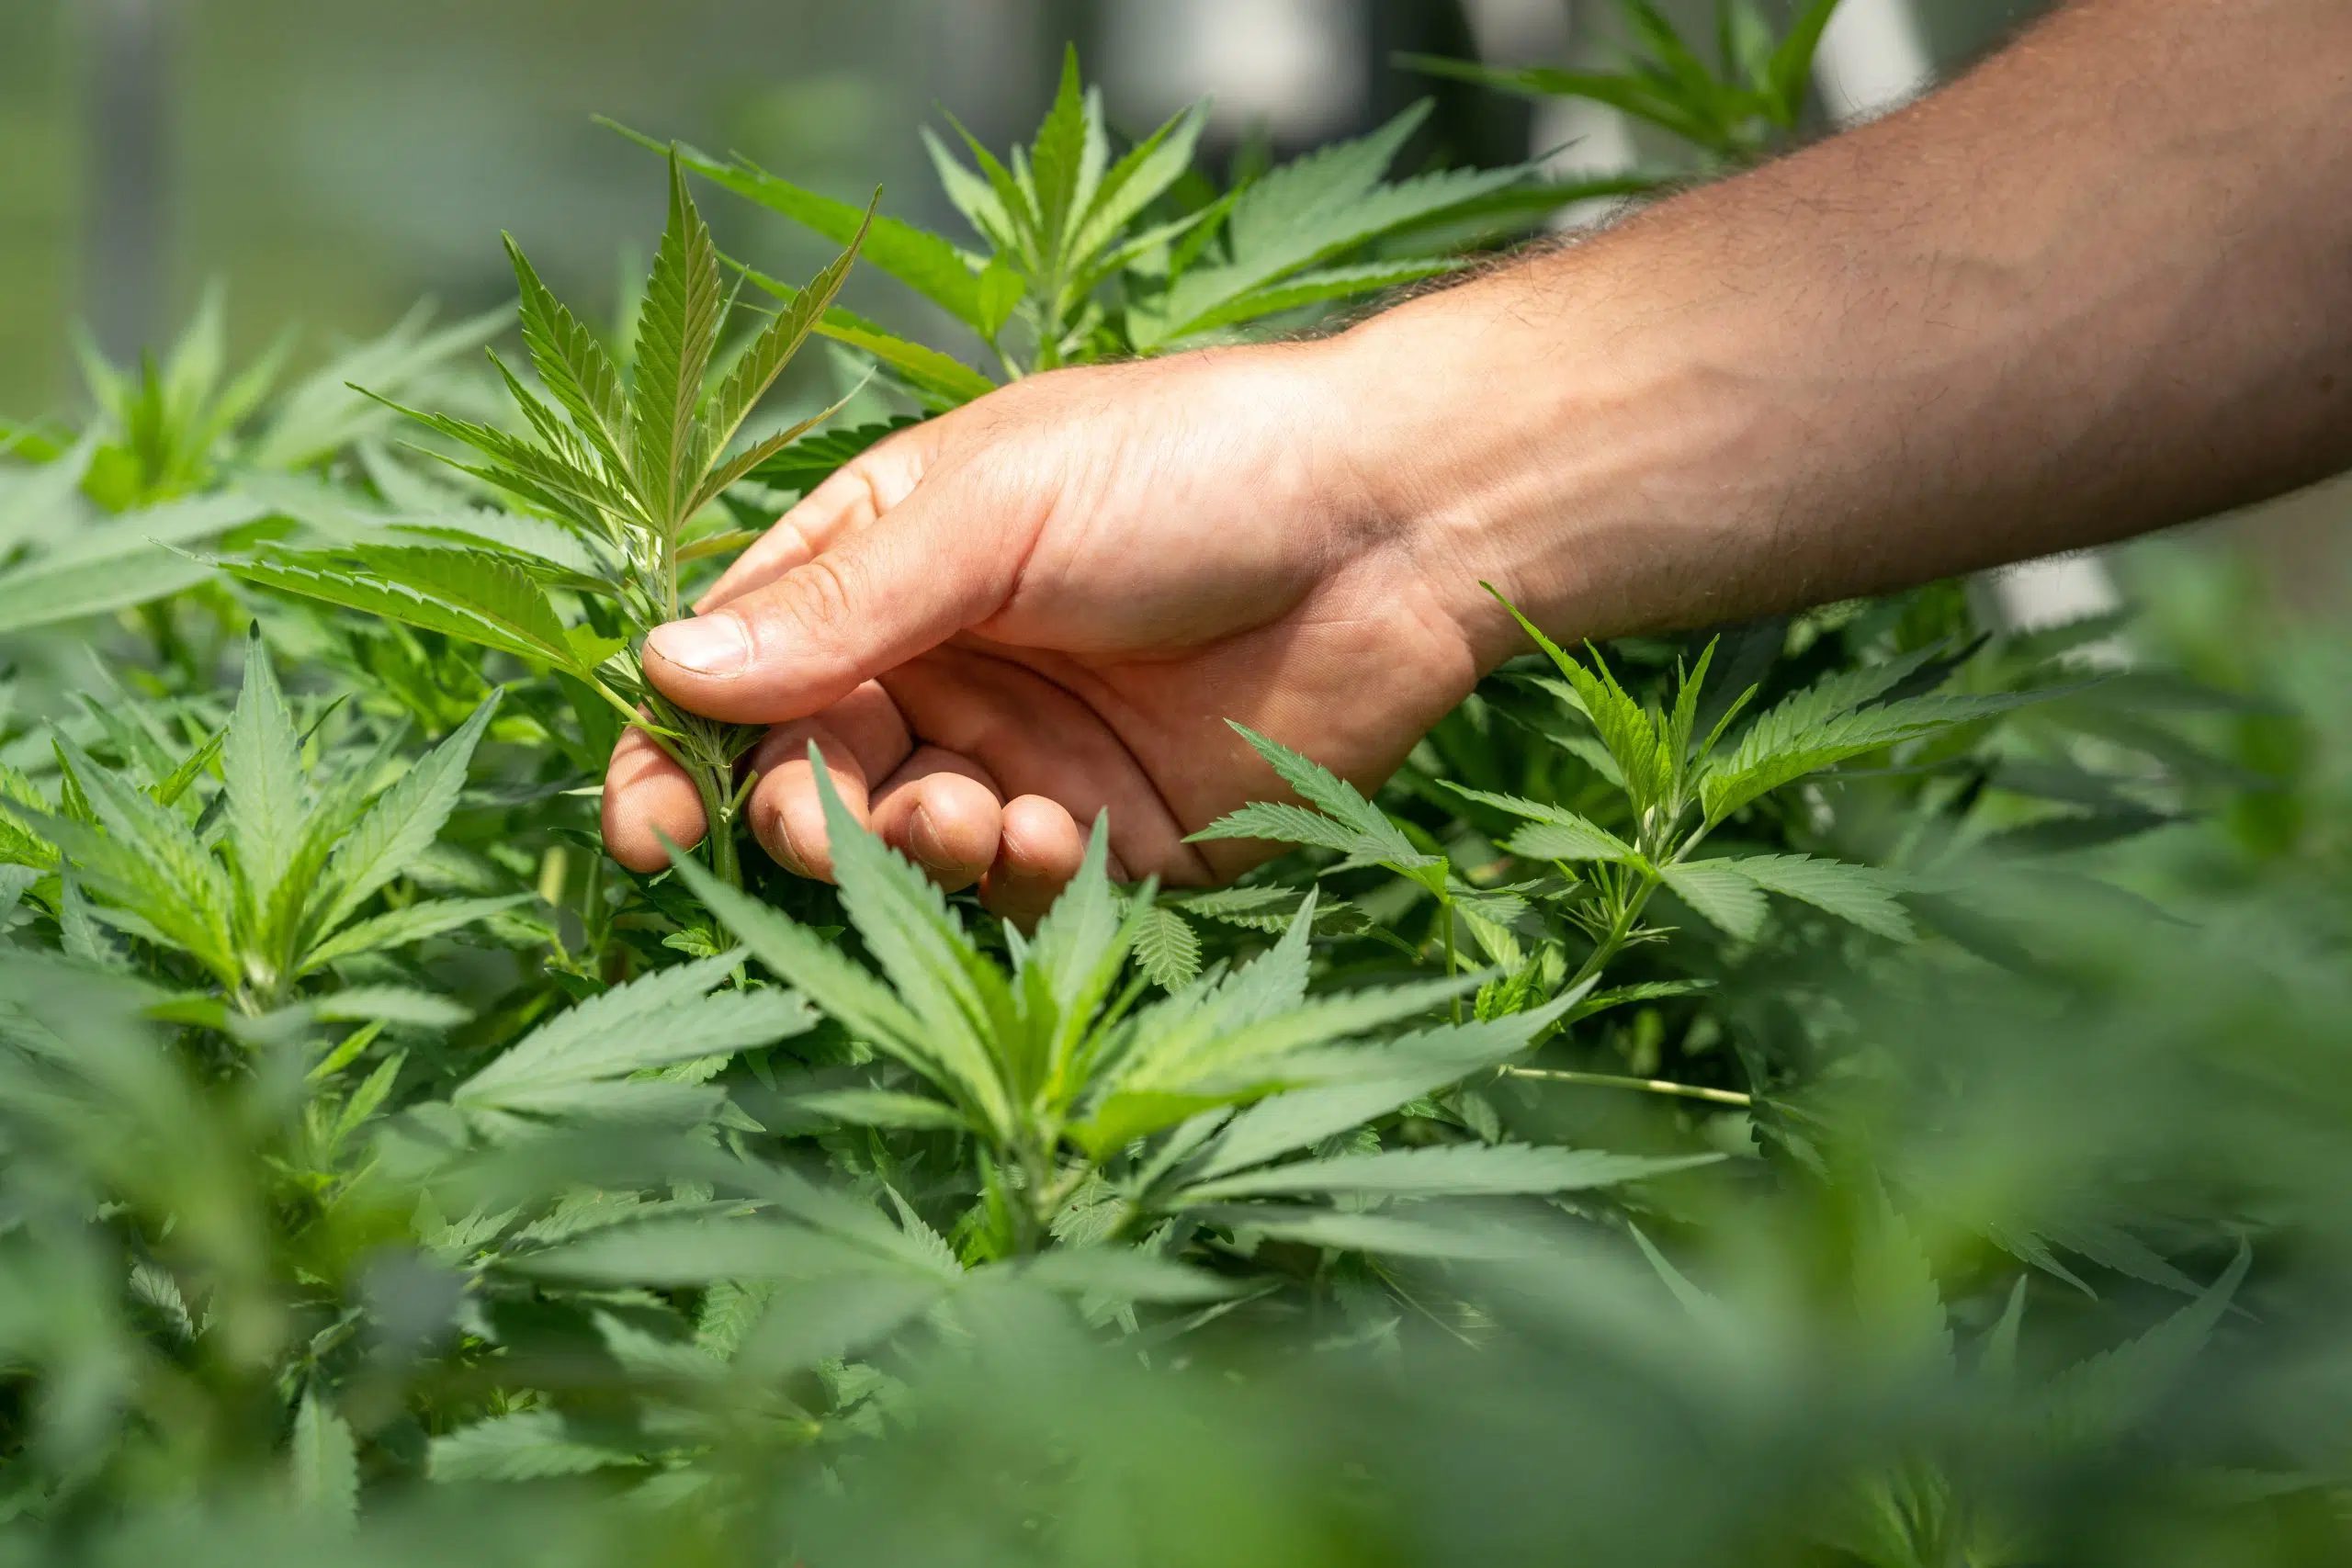 Legislation to legalize recreational marijuana is nipped in the bud